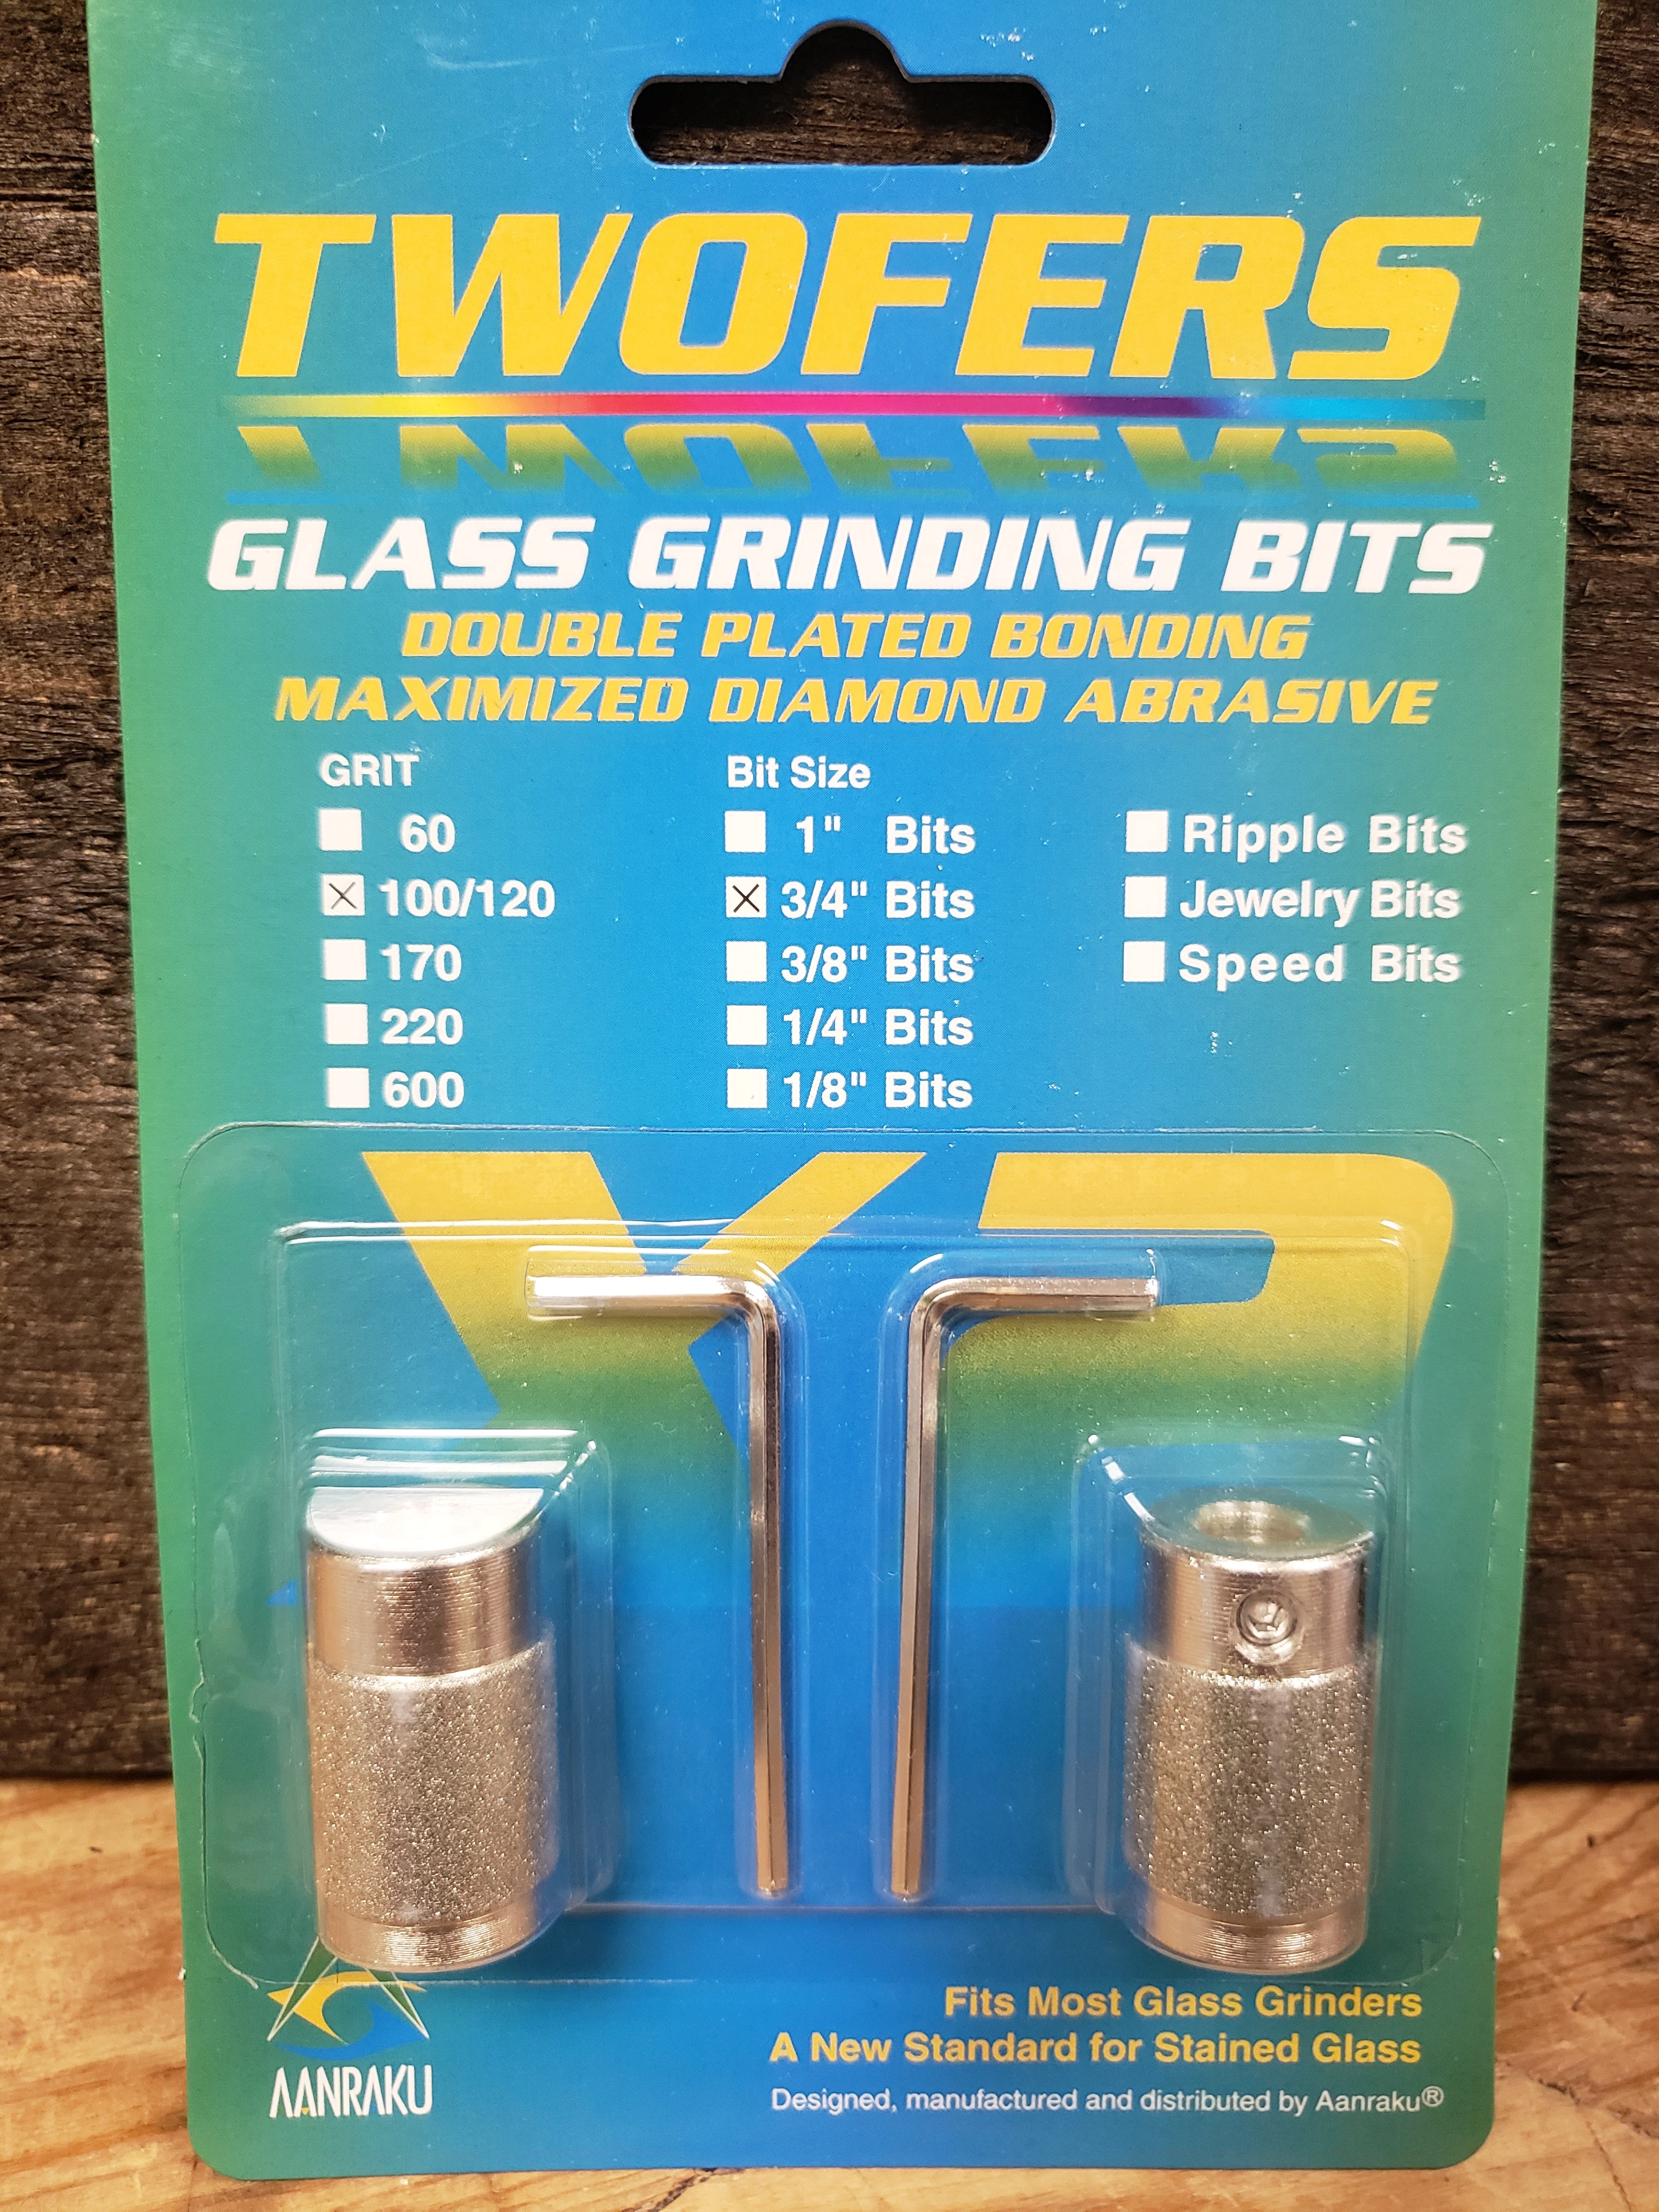 Twofers Glass Grinding Bits